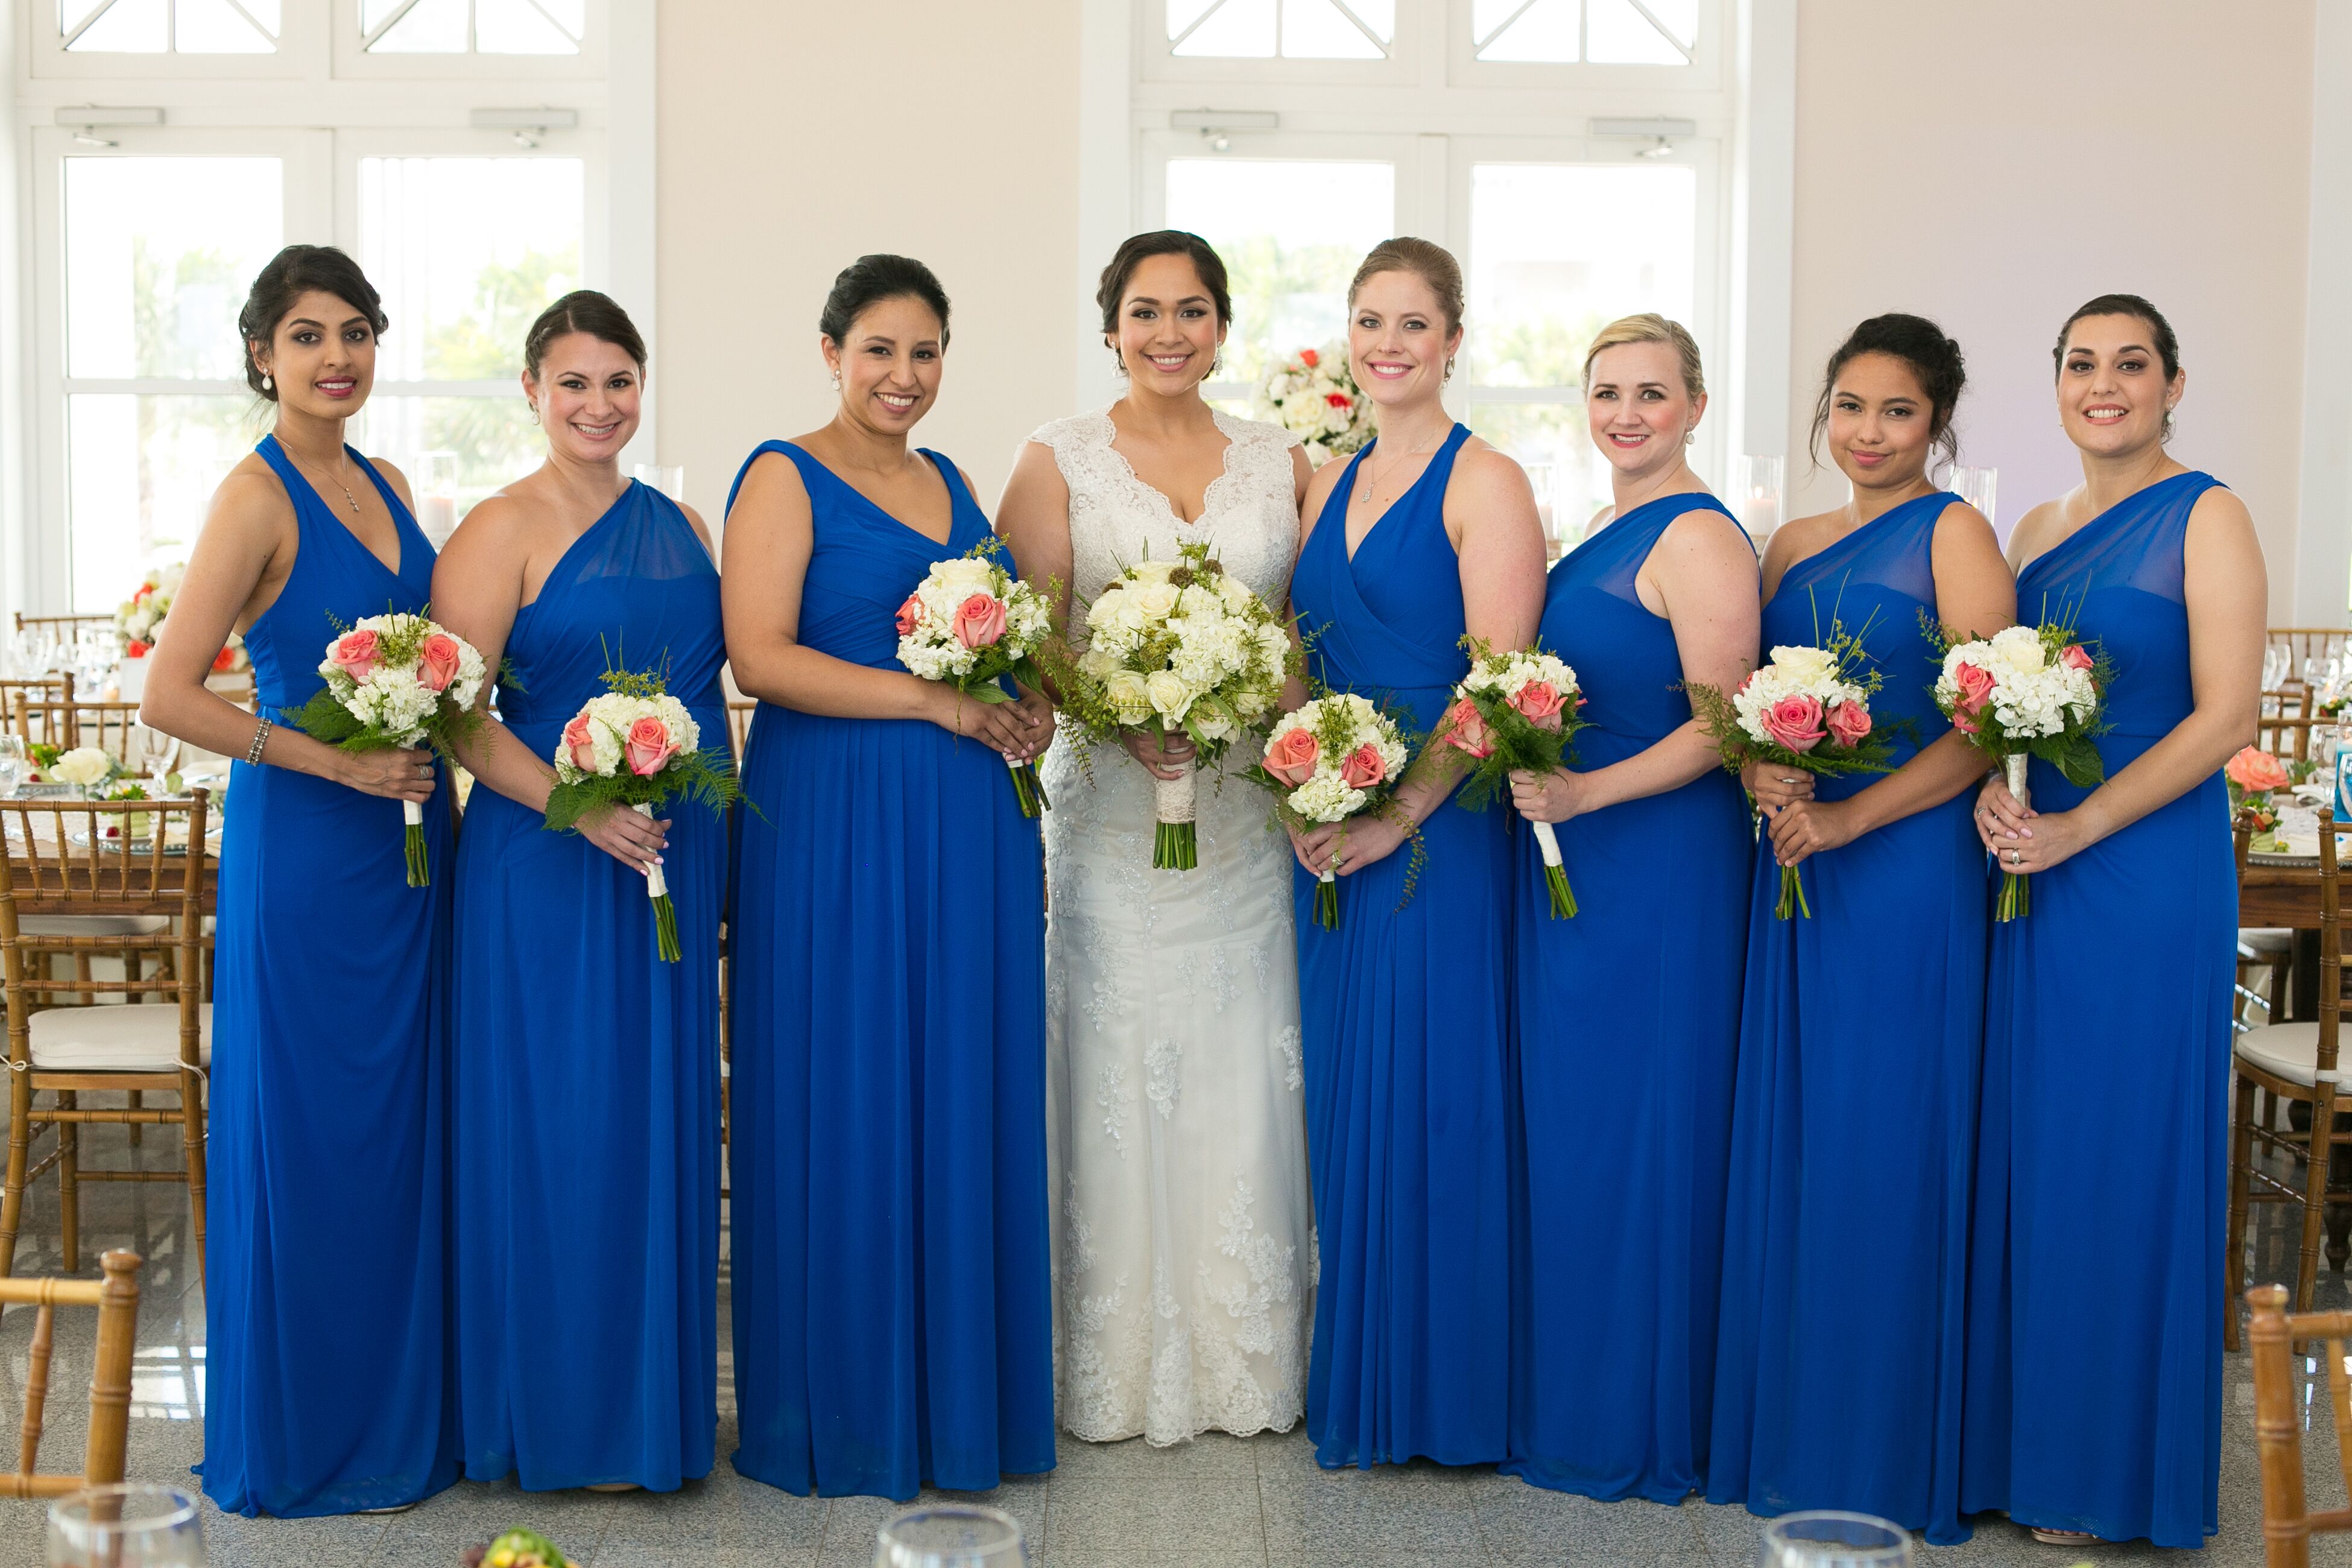 cheap cobalt blue bridesmaid dresses